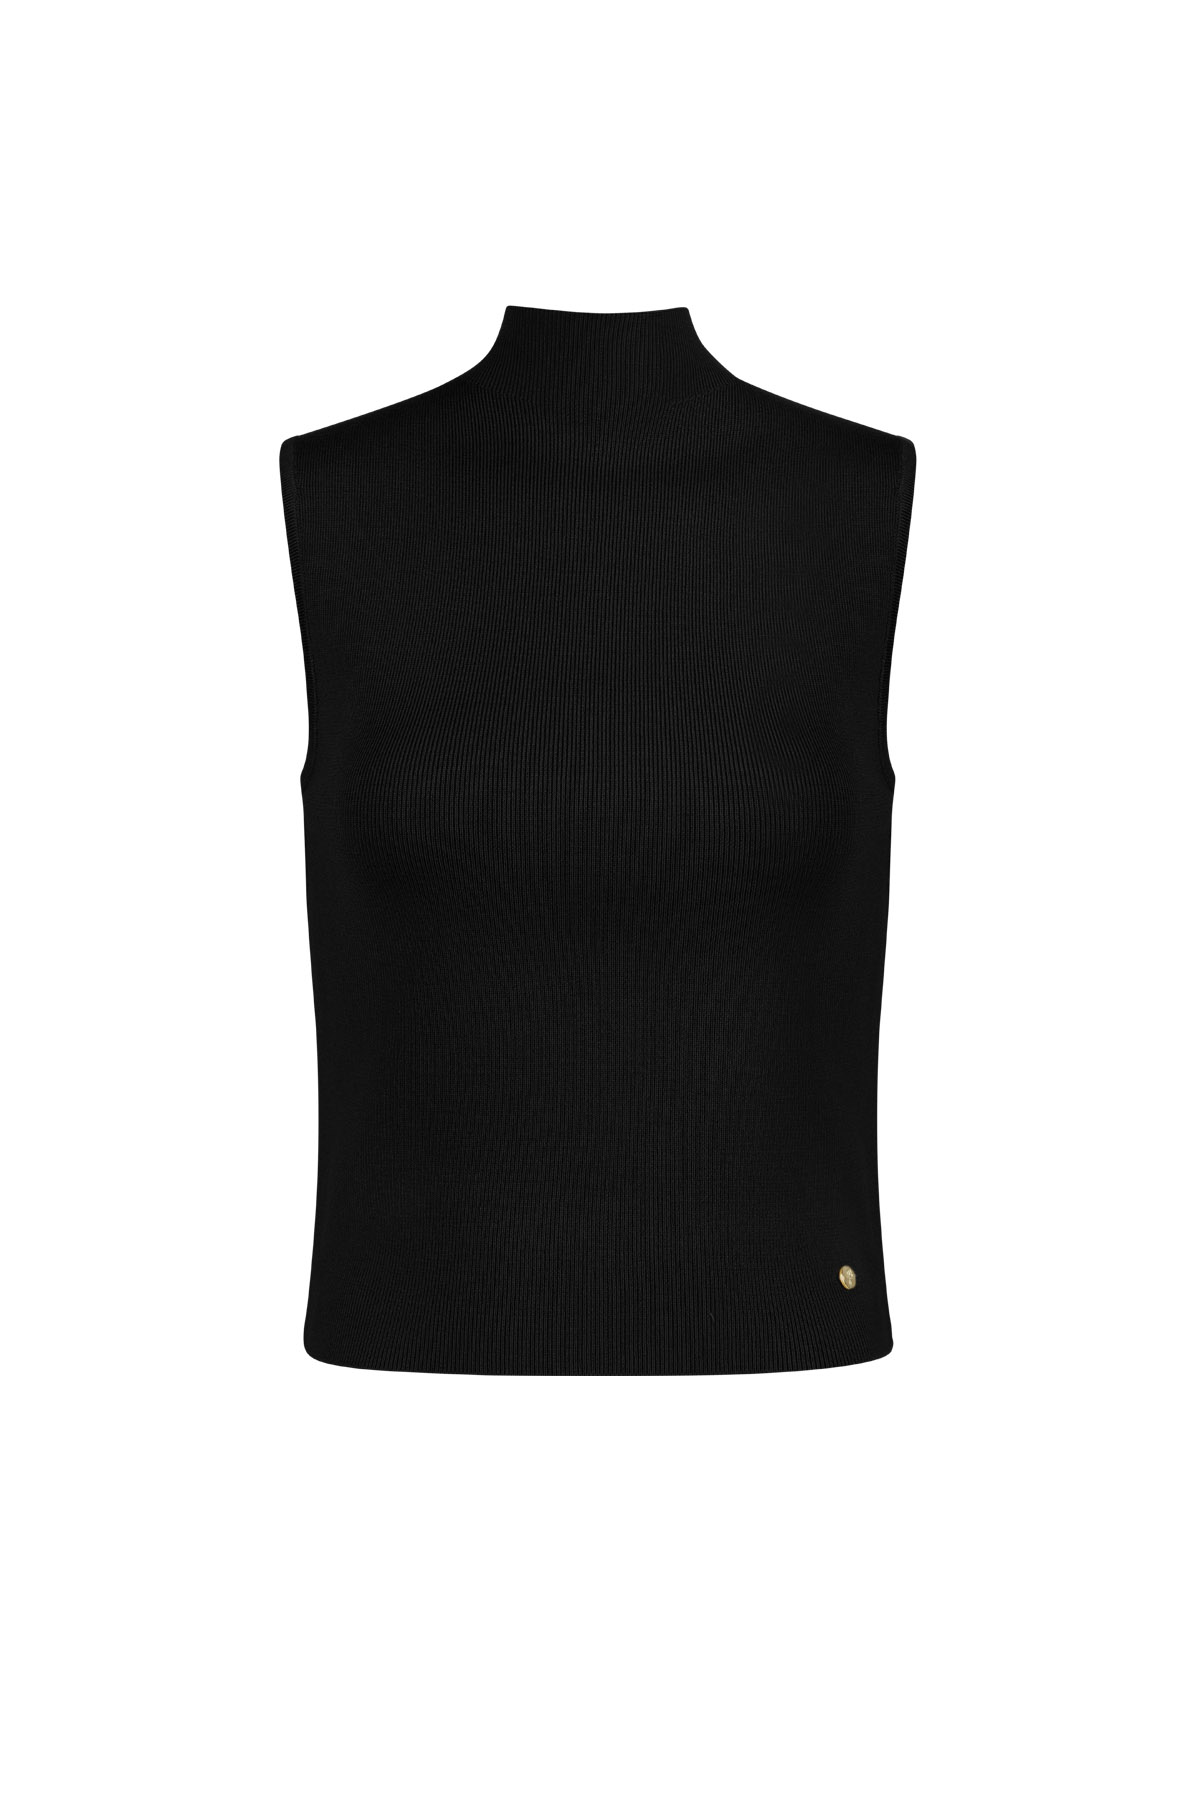 Sleeveless top with low collar small/medium – black 